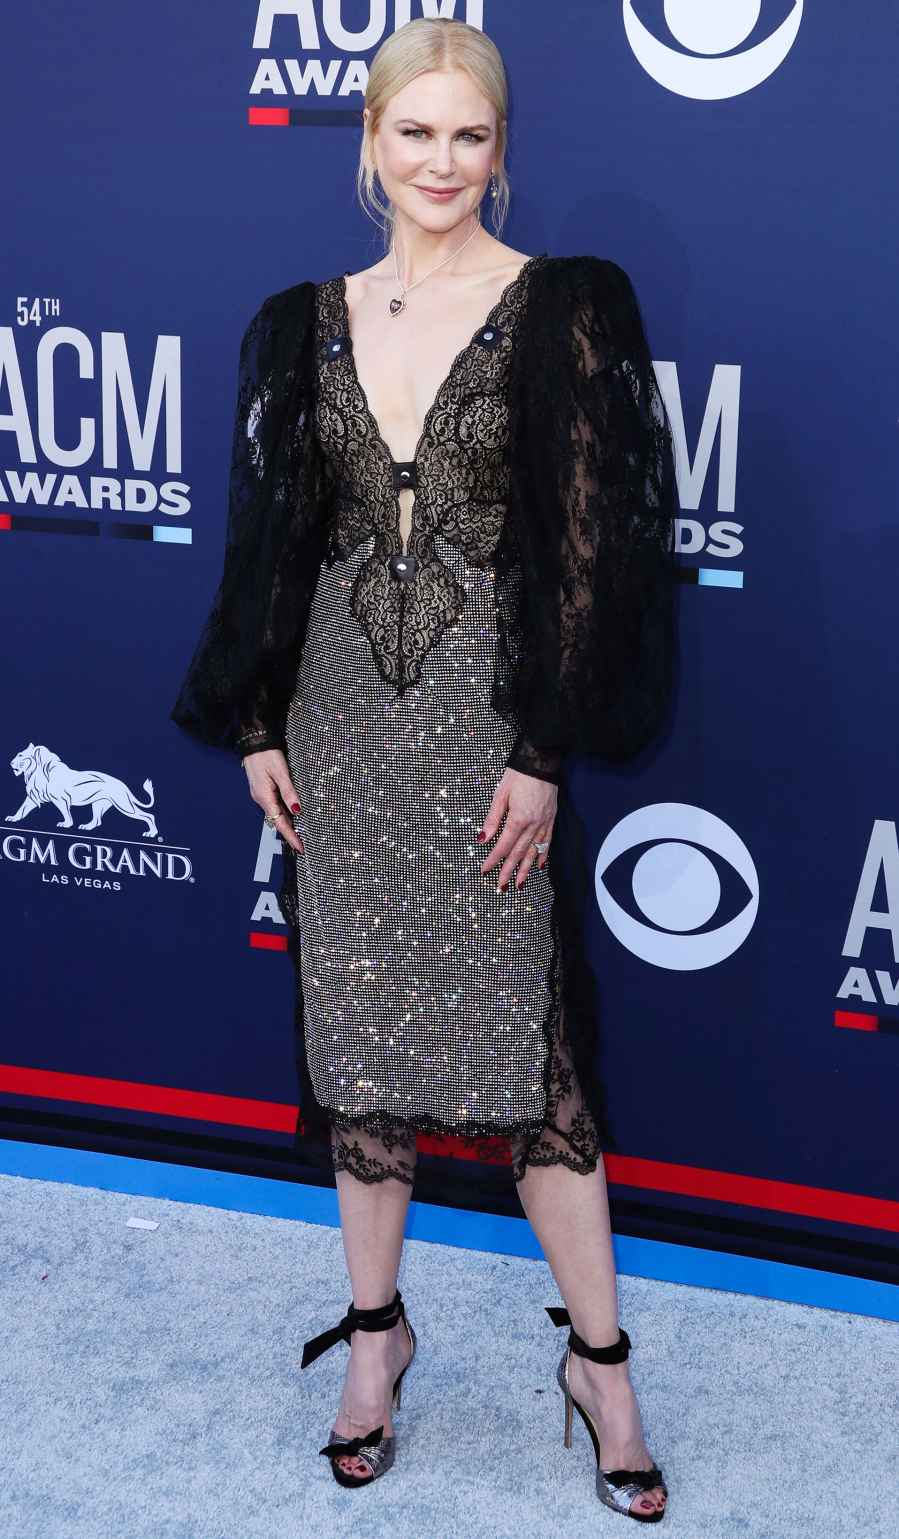 Celebs Wearing Christopher Kane - Nicole Kidman April 7, 2019